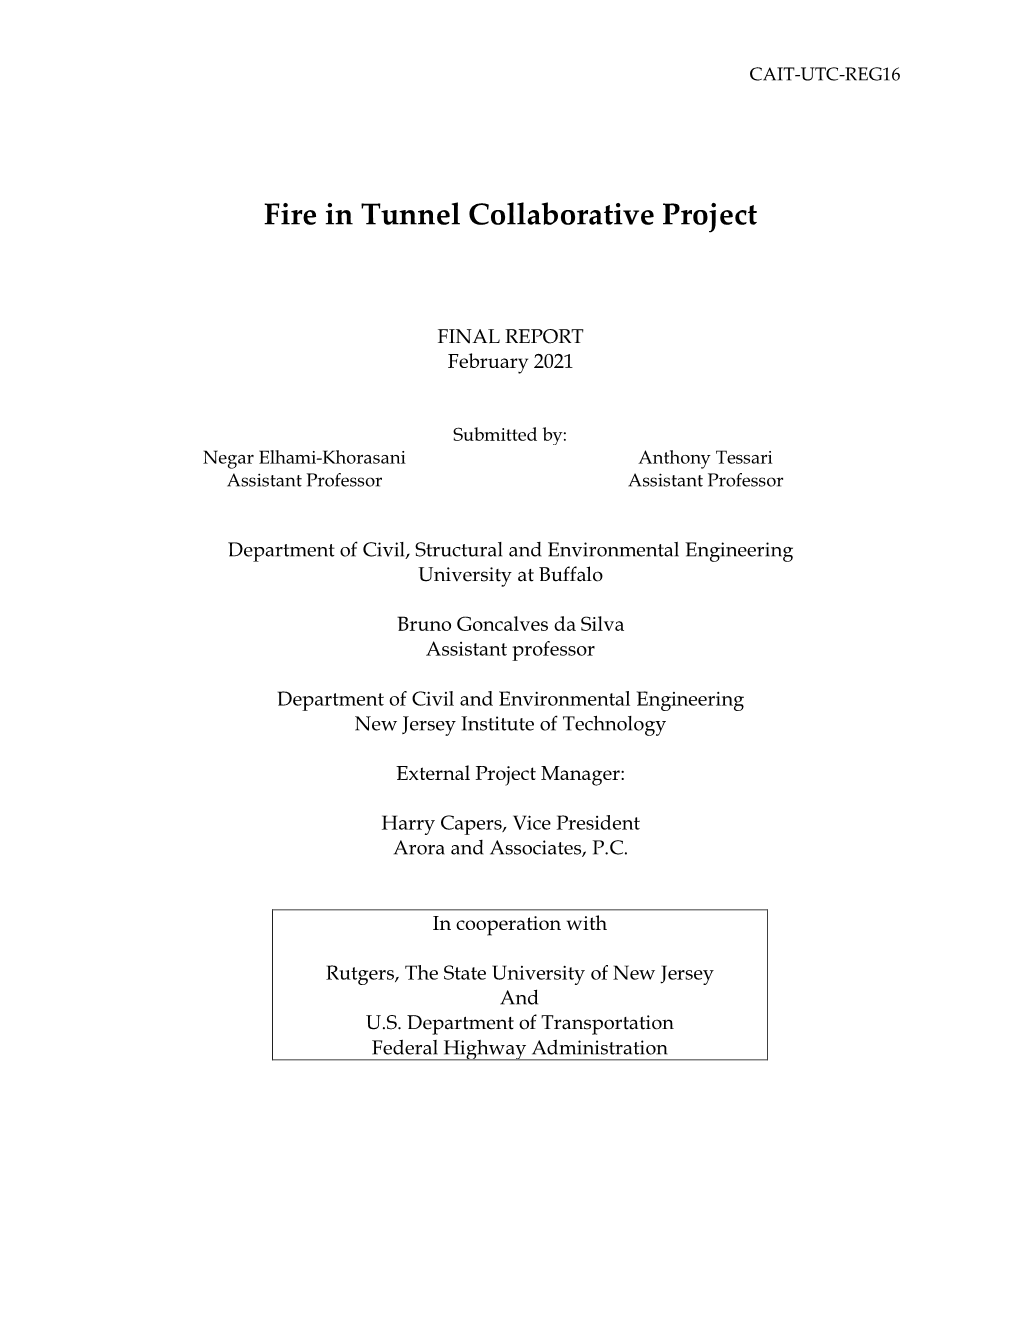 Fire in Tunnel Collaborative Project